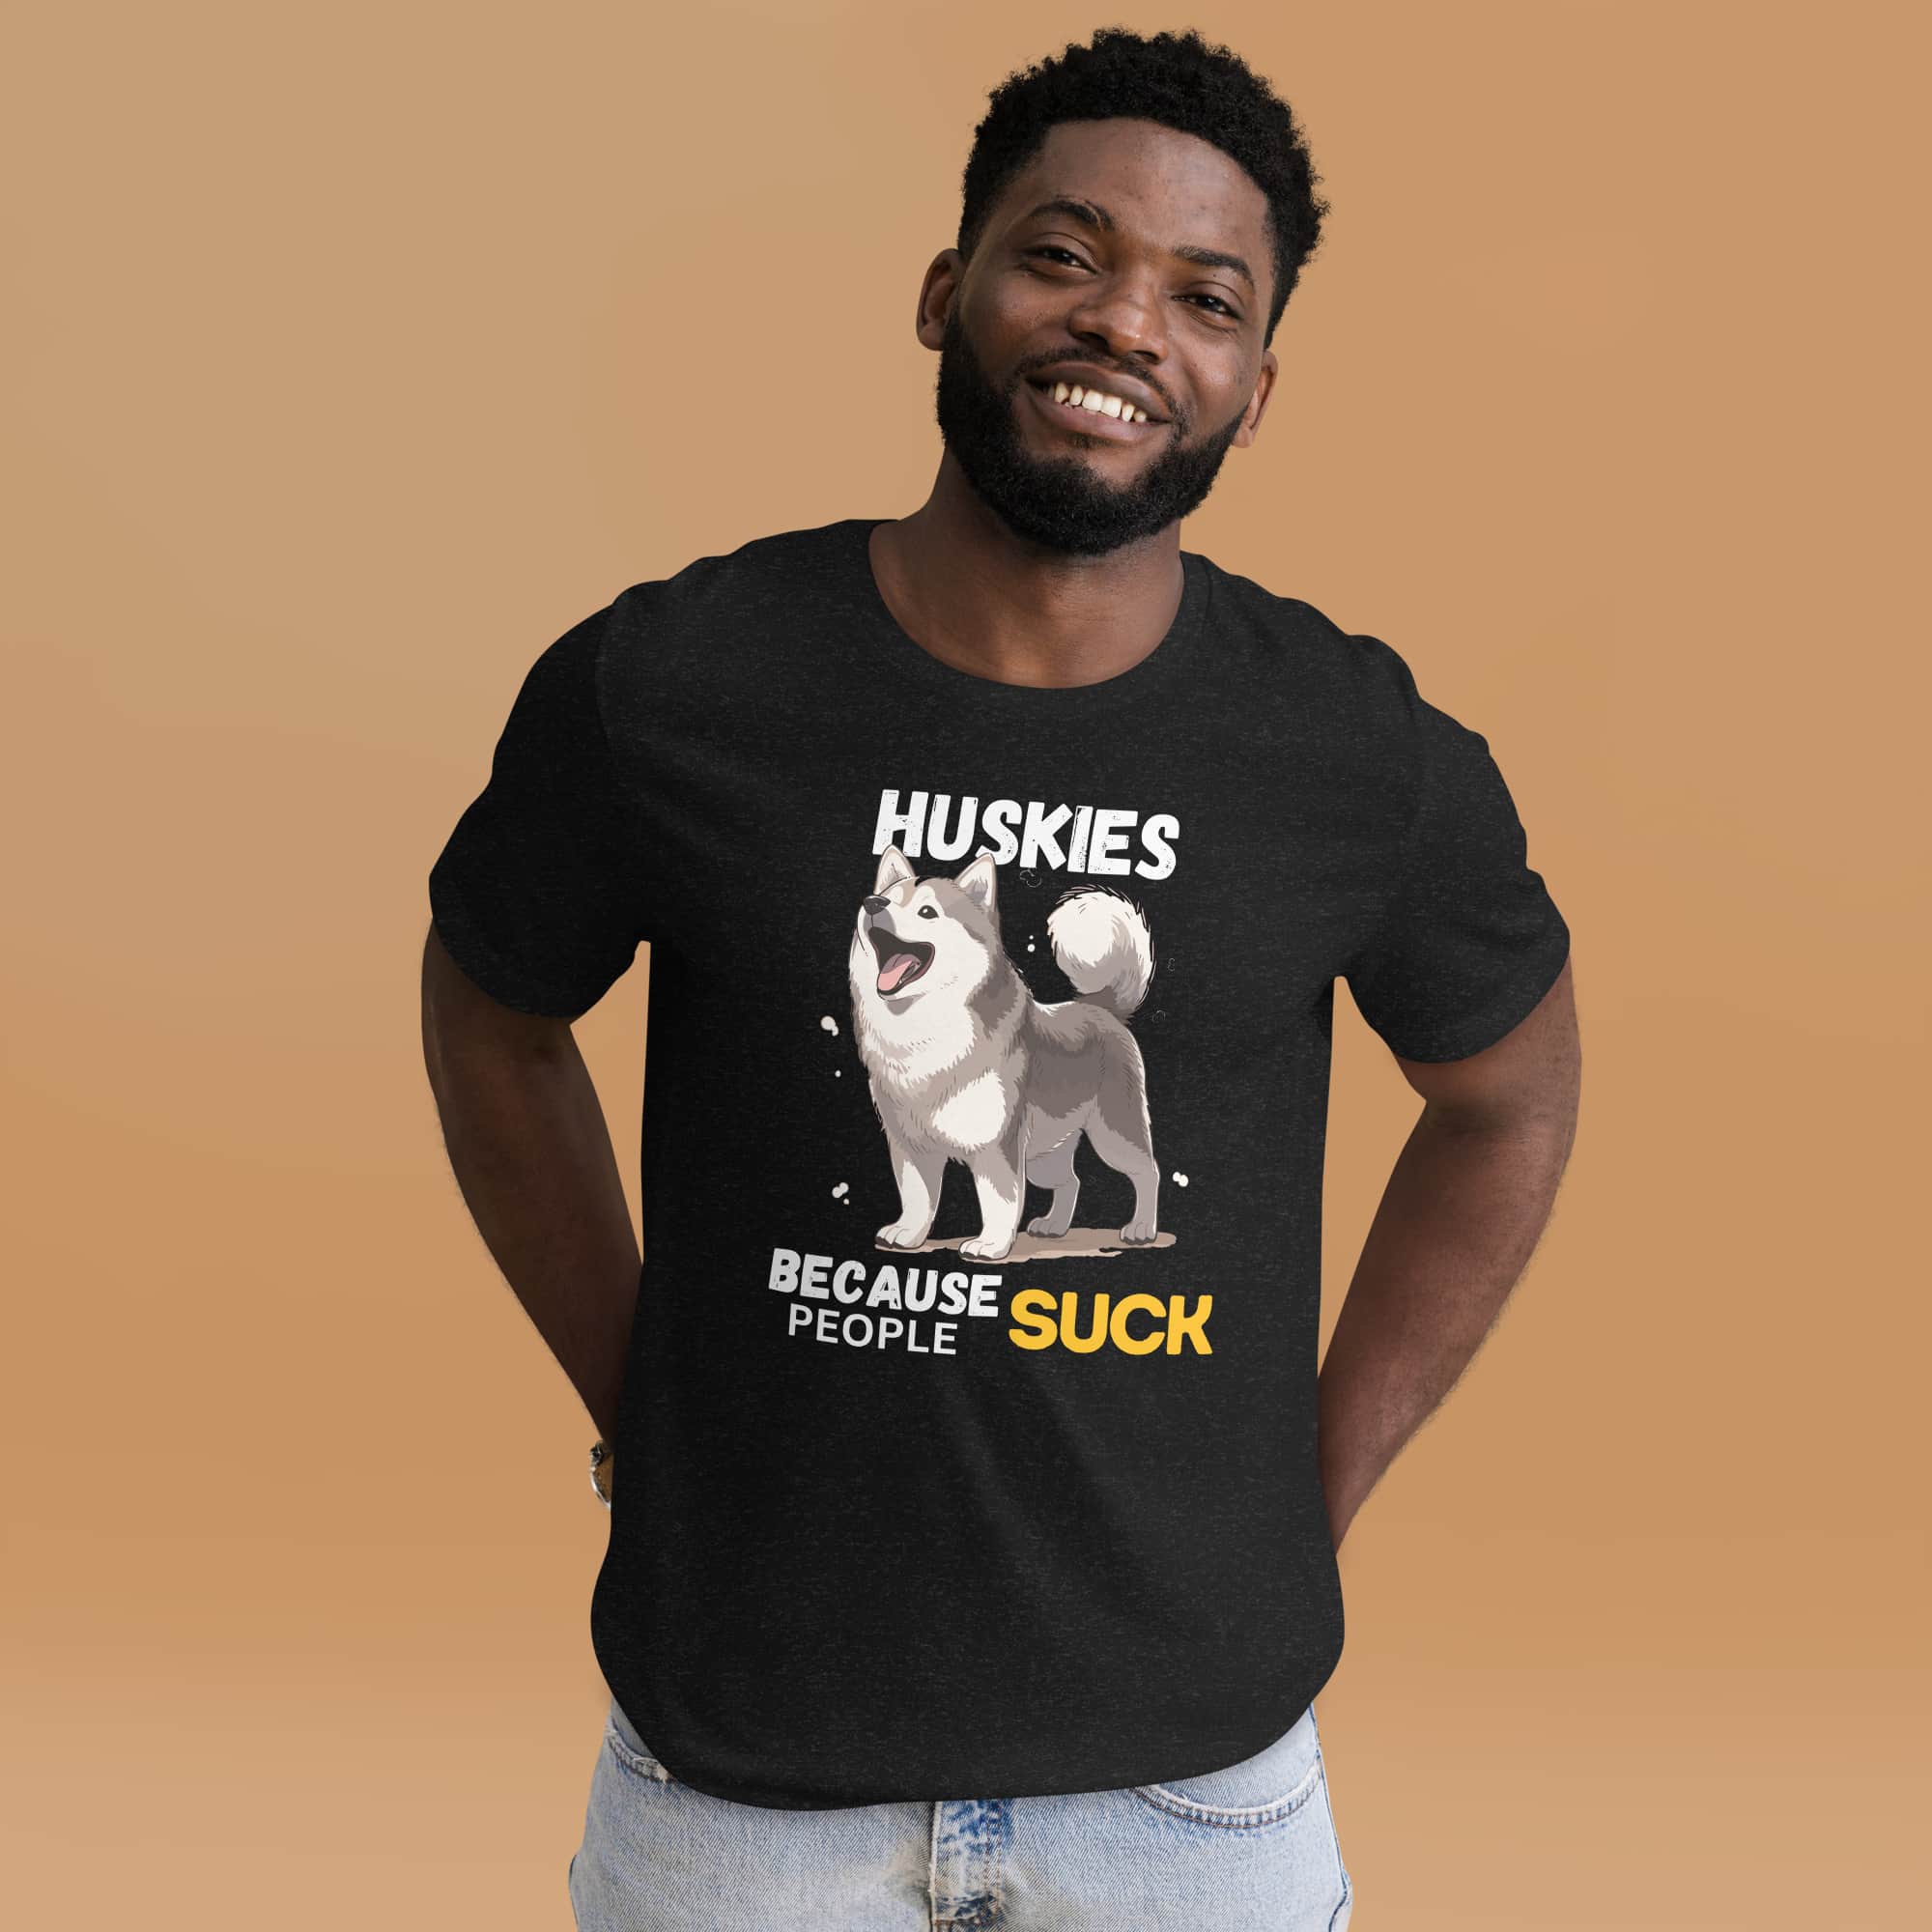 Huskies Because People Suck Unisex T-Shirt male t